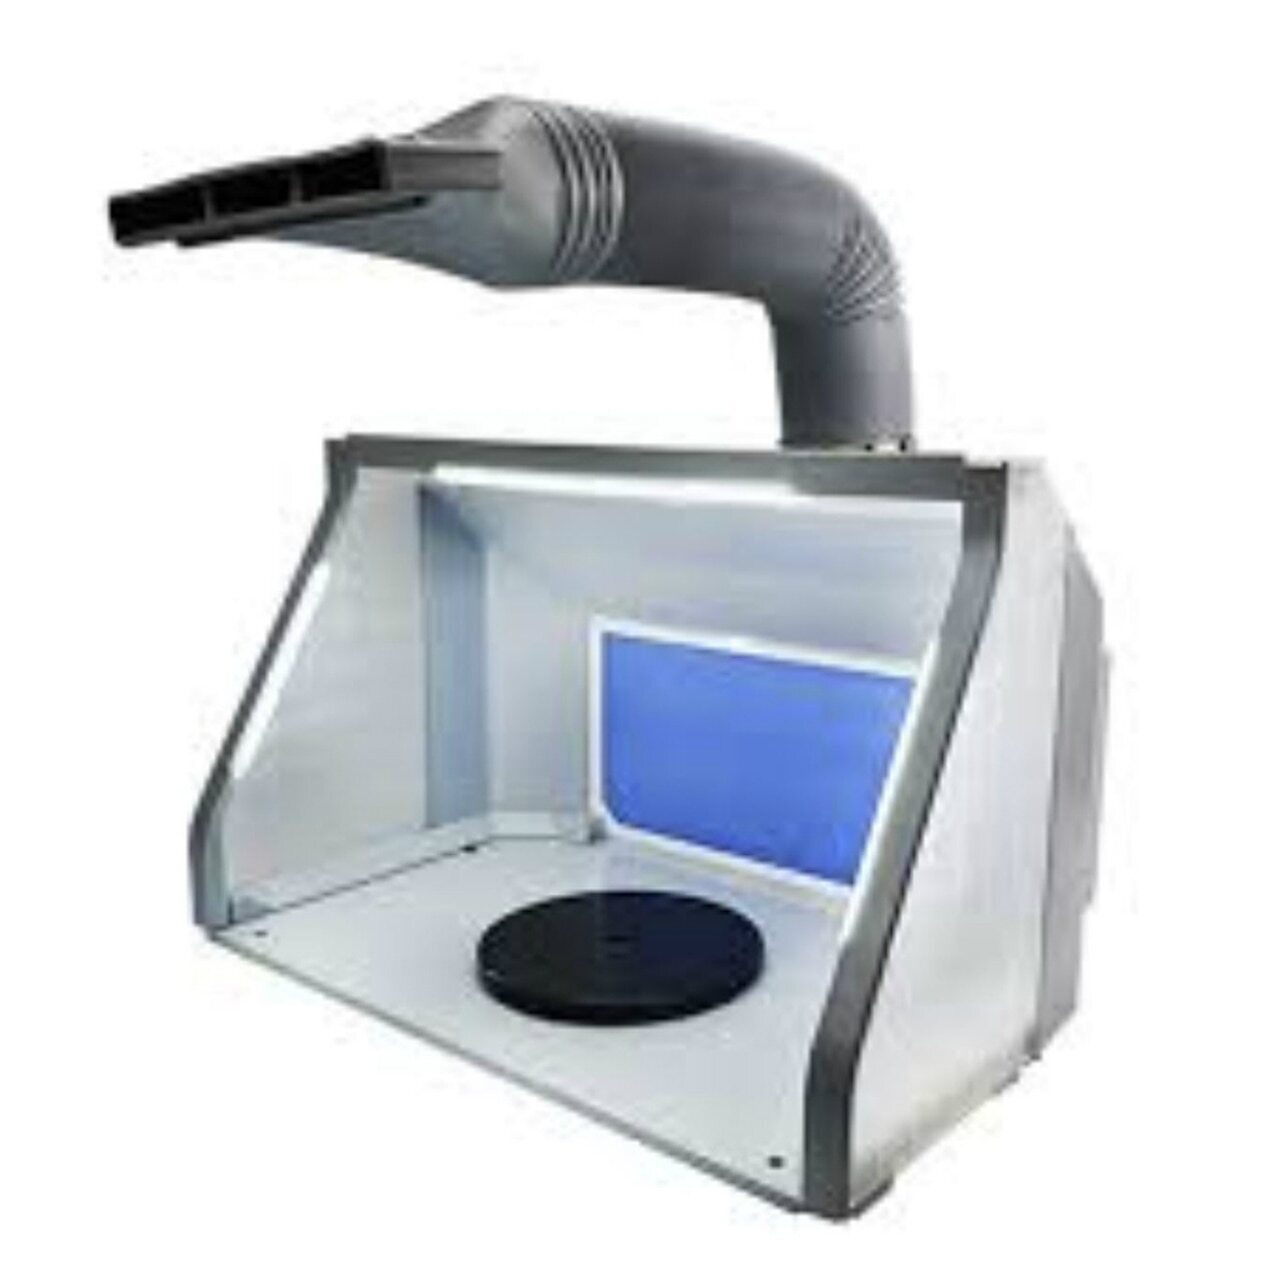 Hseng Spray Booth Kit Item No.: HS-E550BLK - [Sunshine-Coast] - Hseng - [RC-Car] - [Scale-Model]